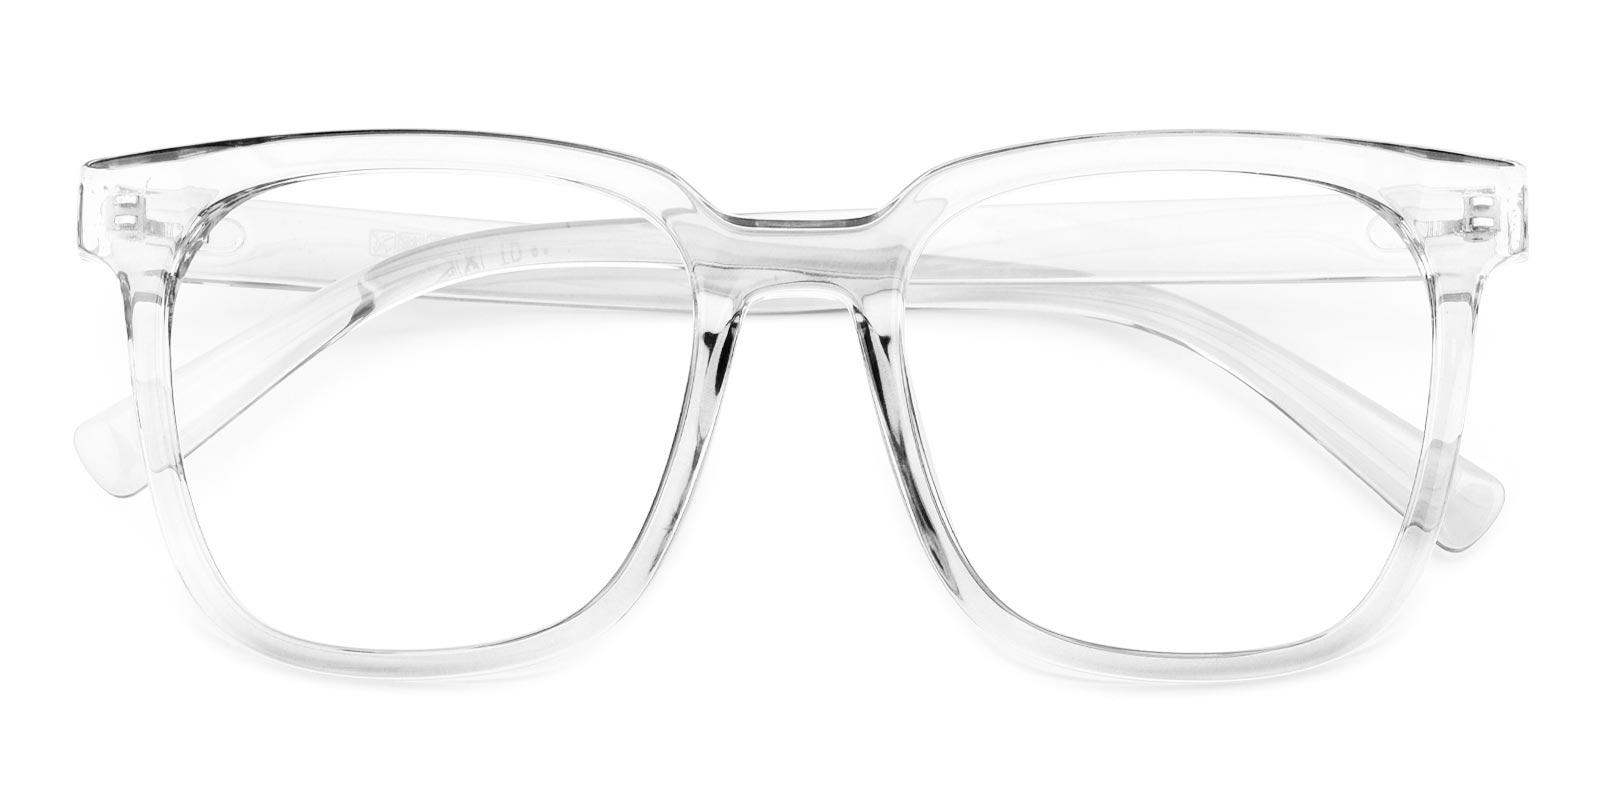 Phil-Translucent-Square-TR-Eyeglasses-detail